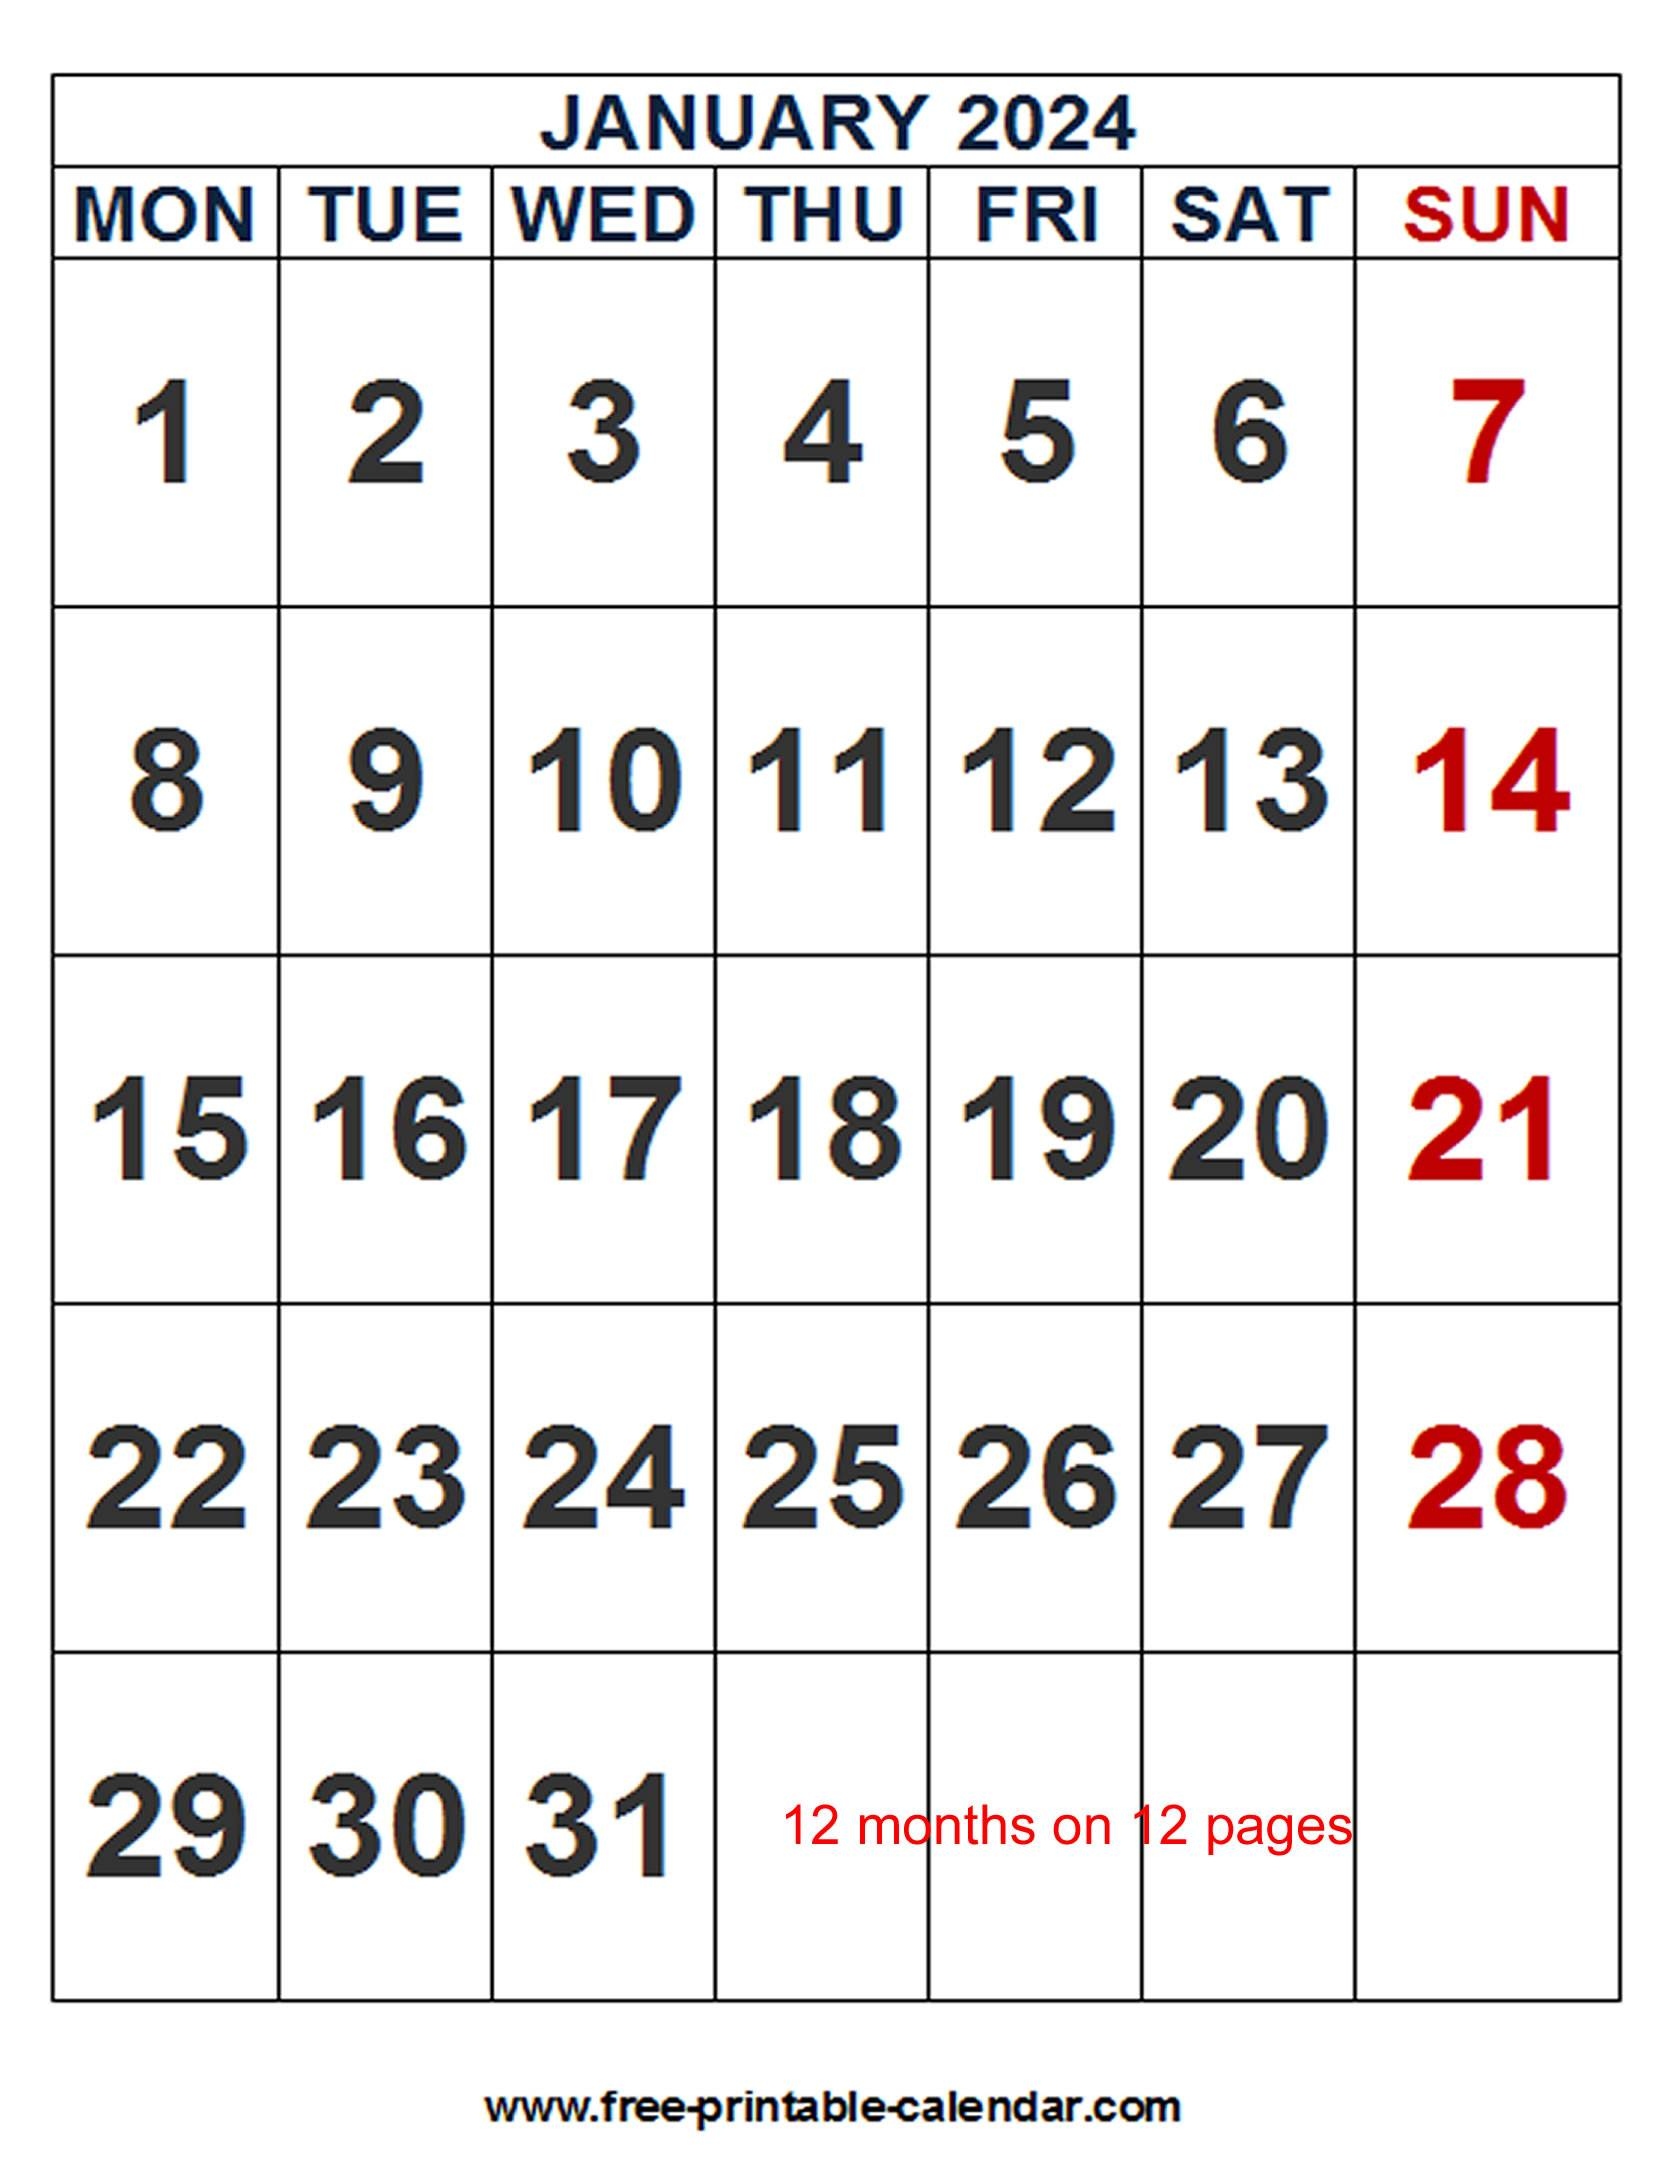 2024 Calendar Word Template - Free-Printable-Calendar within Free Printable Calendar 2024 Pdf Word